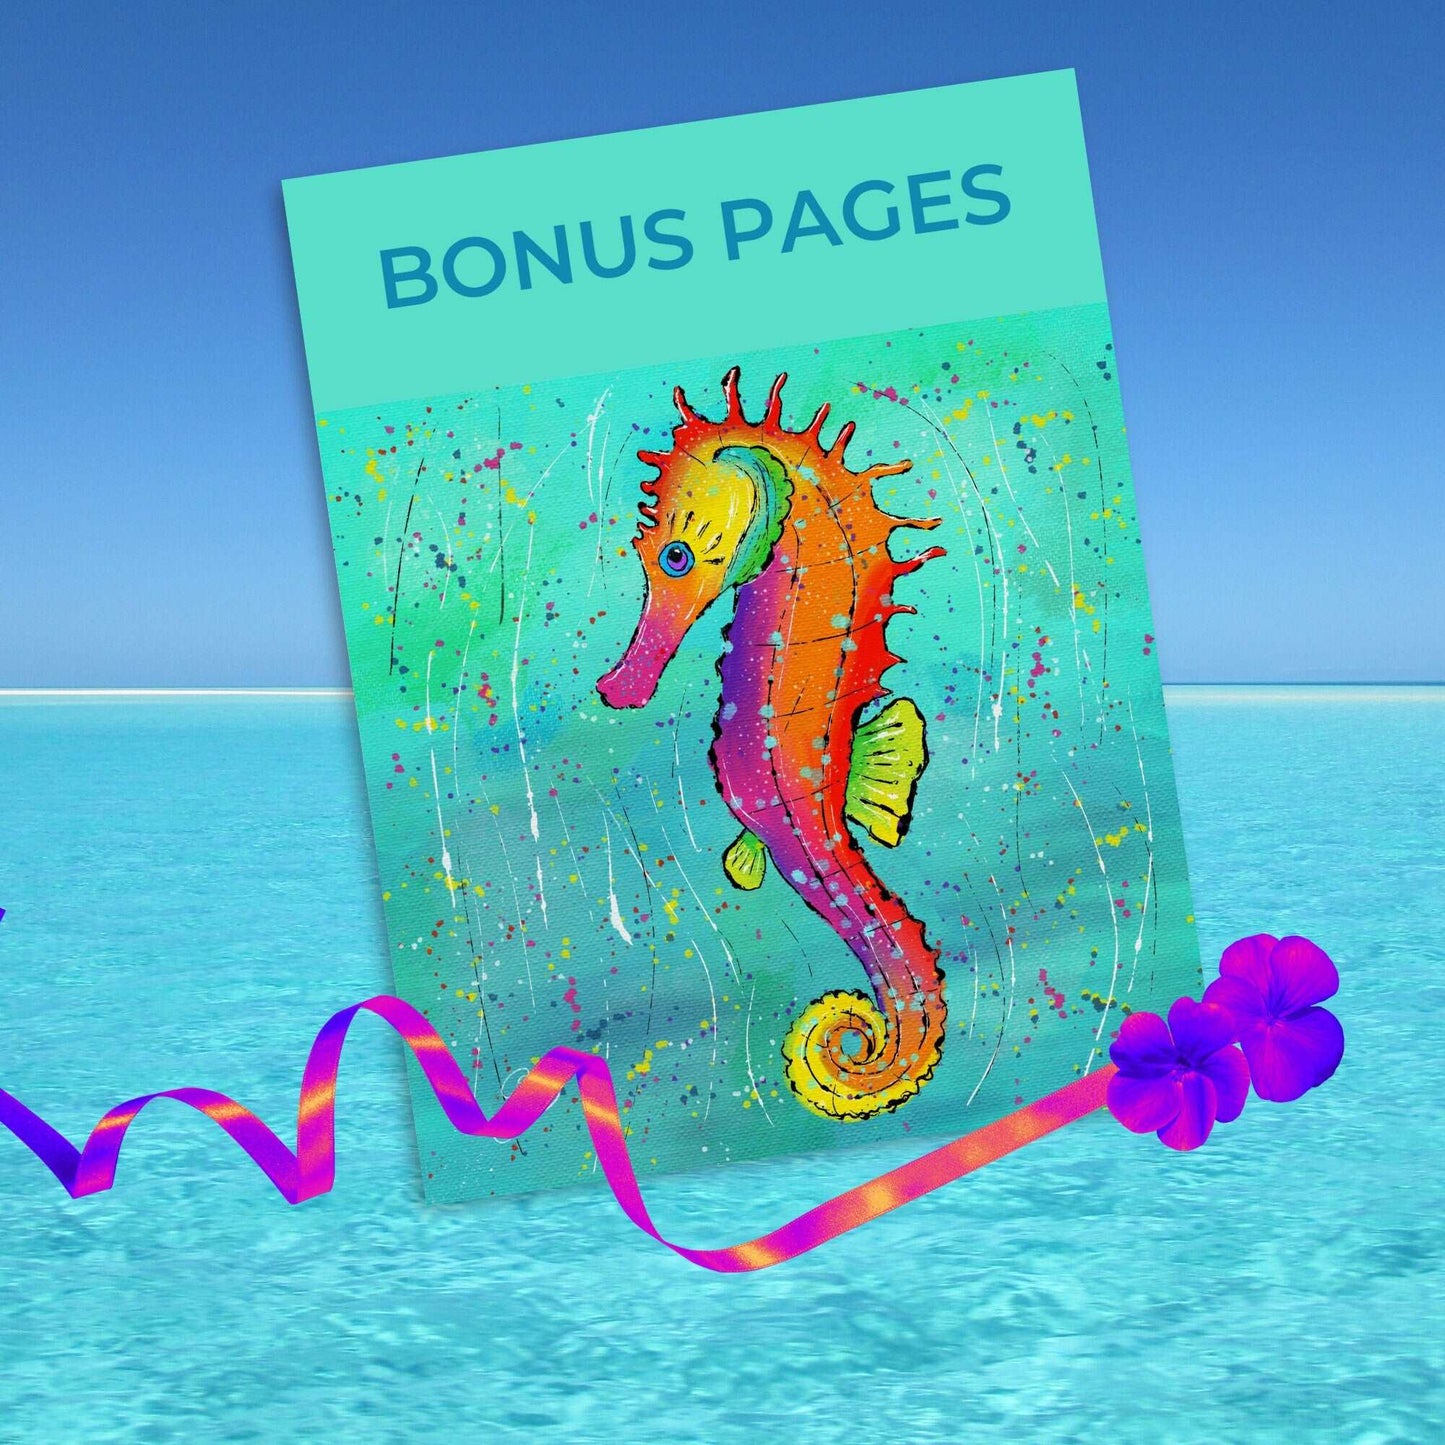 Ocean Theme Planner | 50+ Printable pages | Original Artwork Created By Gayle